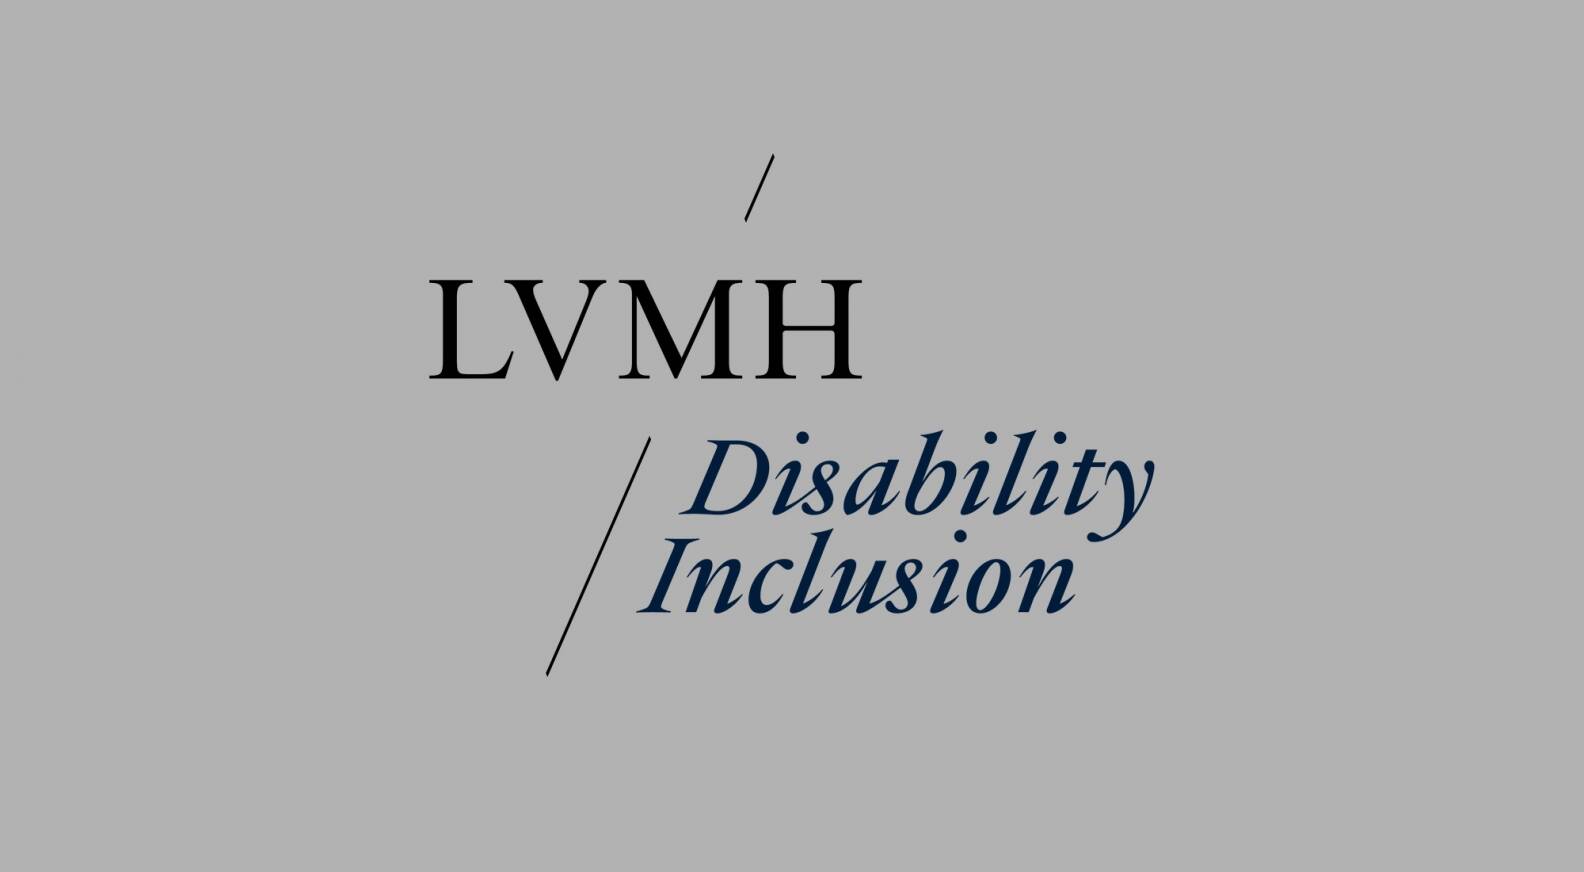 LVMH: Portfolio Makes It One Of The Safest Companies